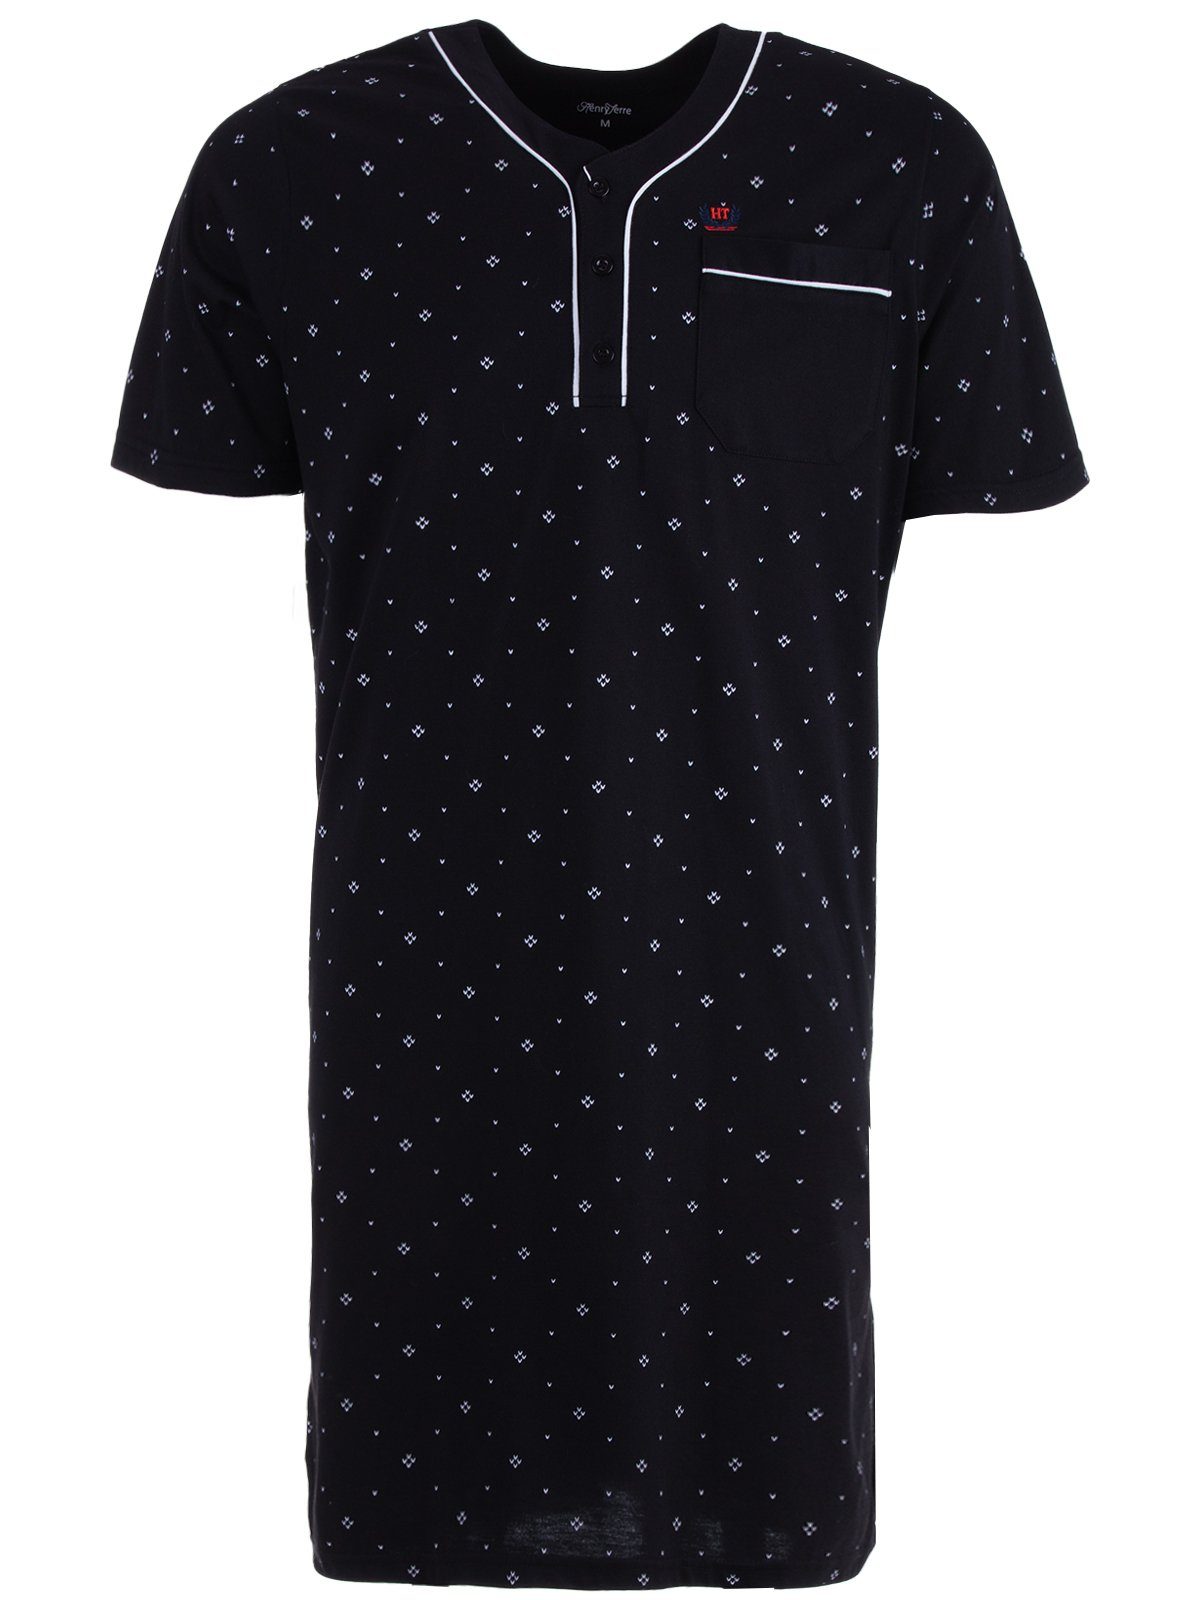 Henry Terre Nachthemd Nachthemd Kurzarm - Paspel Pfeil schwarz